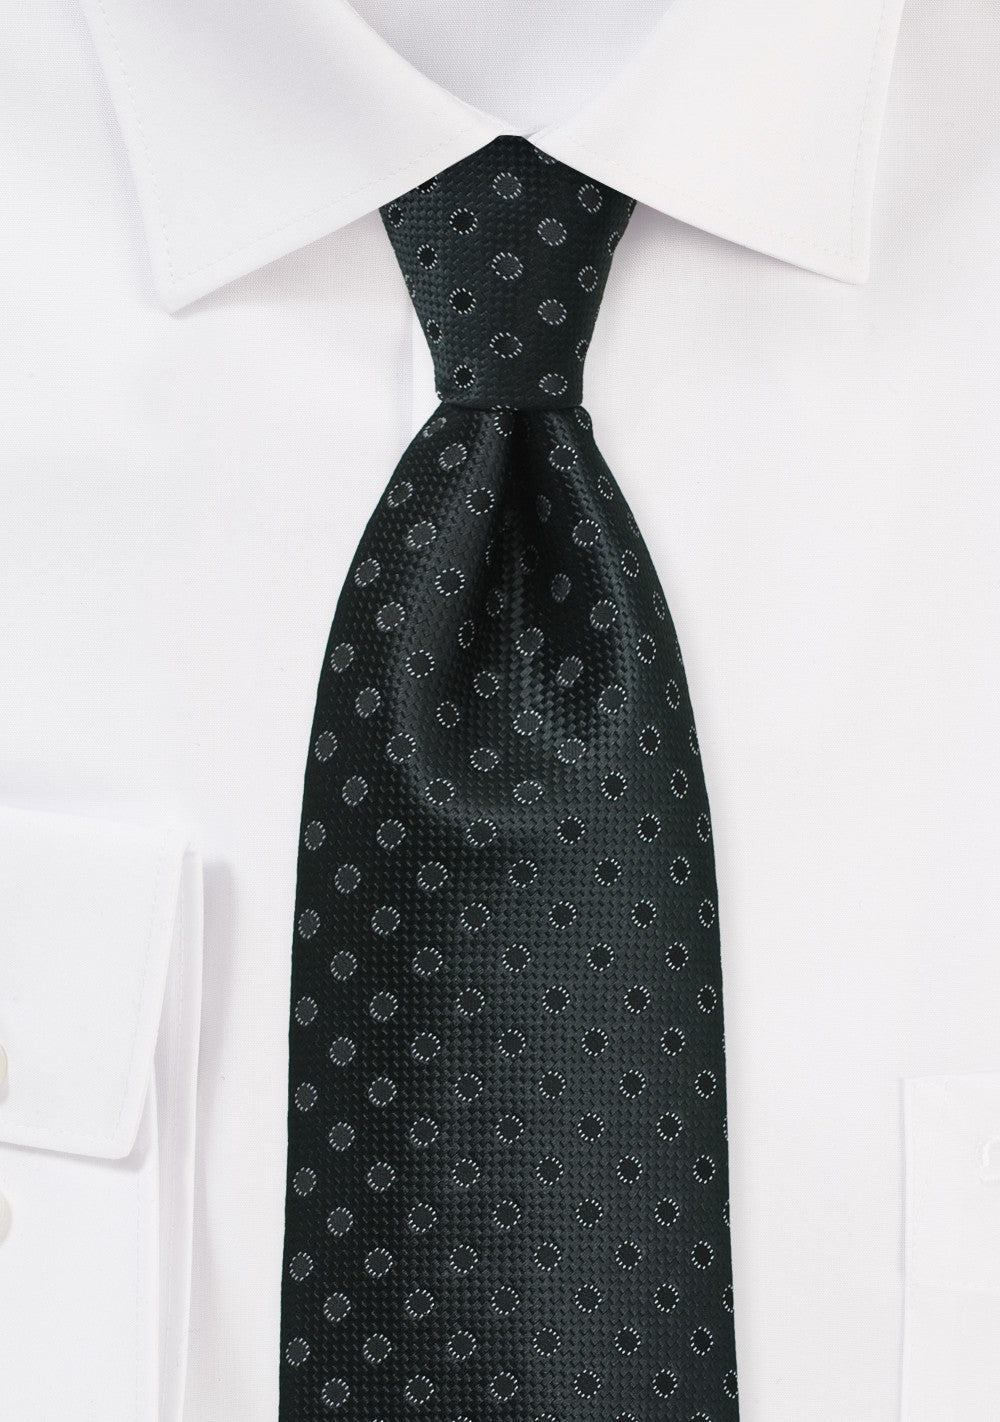 Cravata neagra, 7 cm, microfibra, pentru barbati